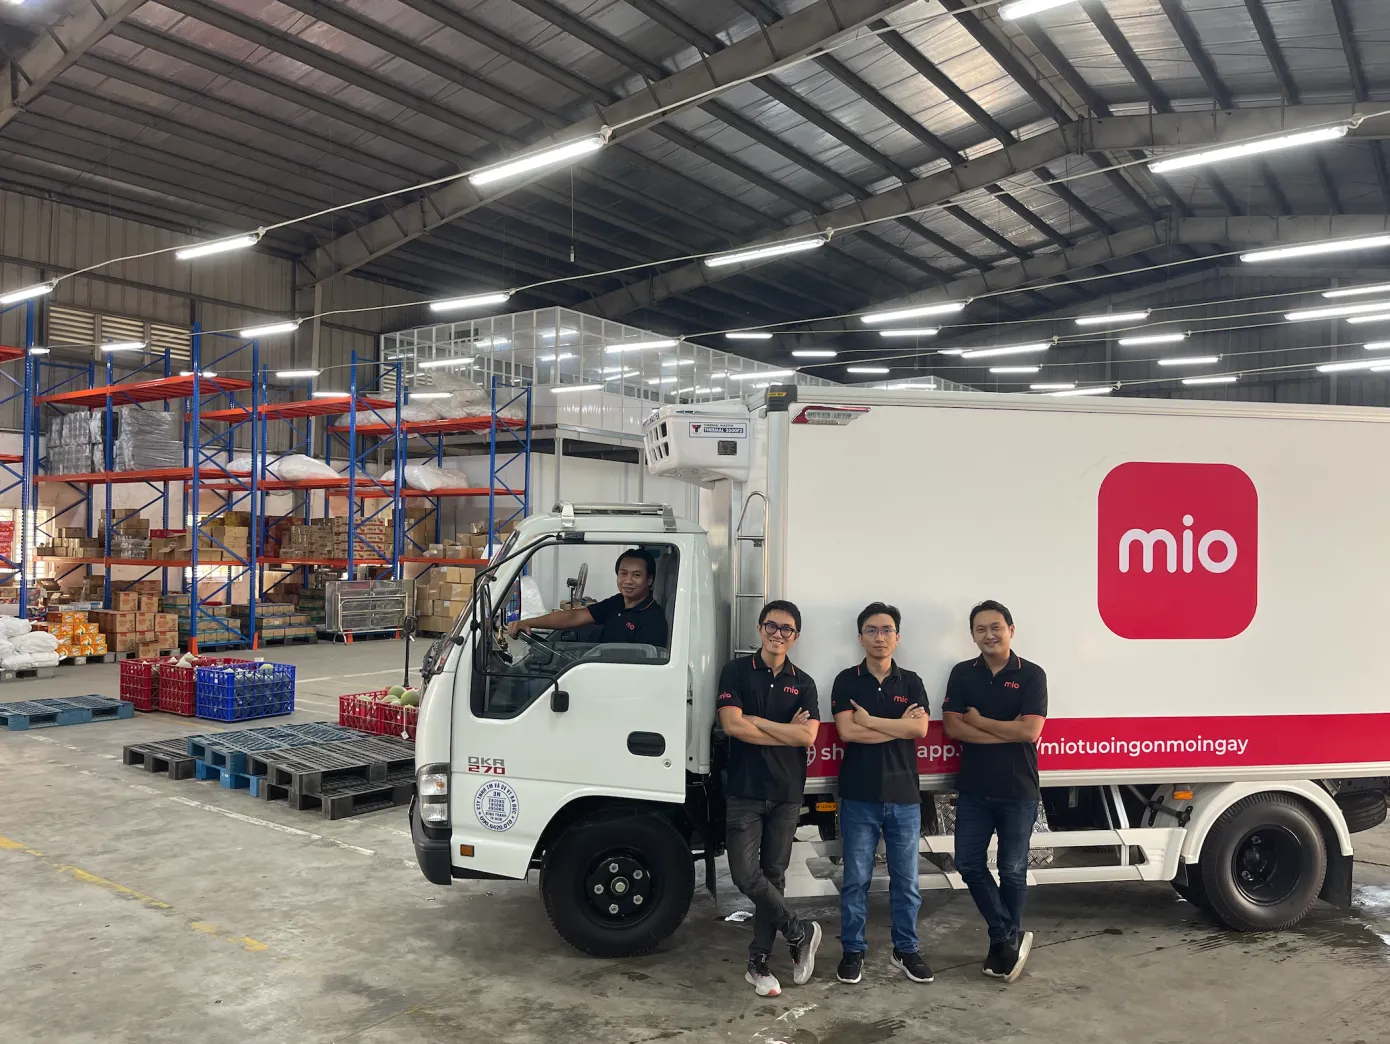 Tech Crunch: Focused on smaller cities, Vietnamese social commerce startup Mio raises $8M Series A